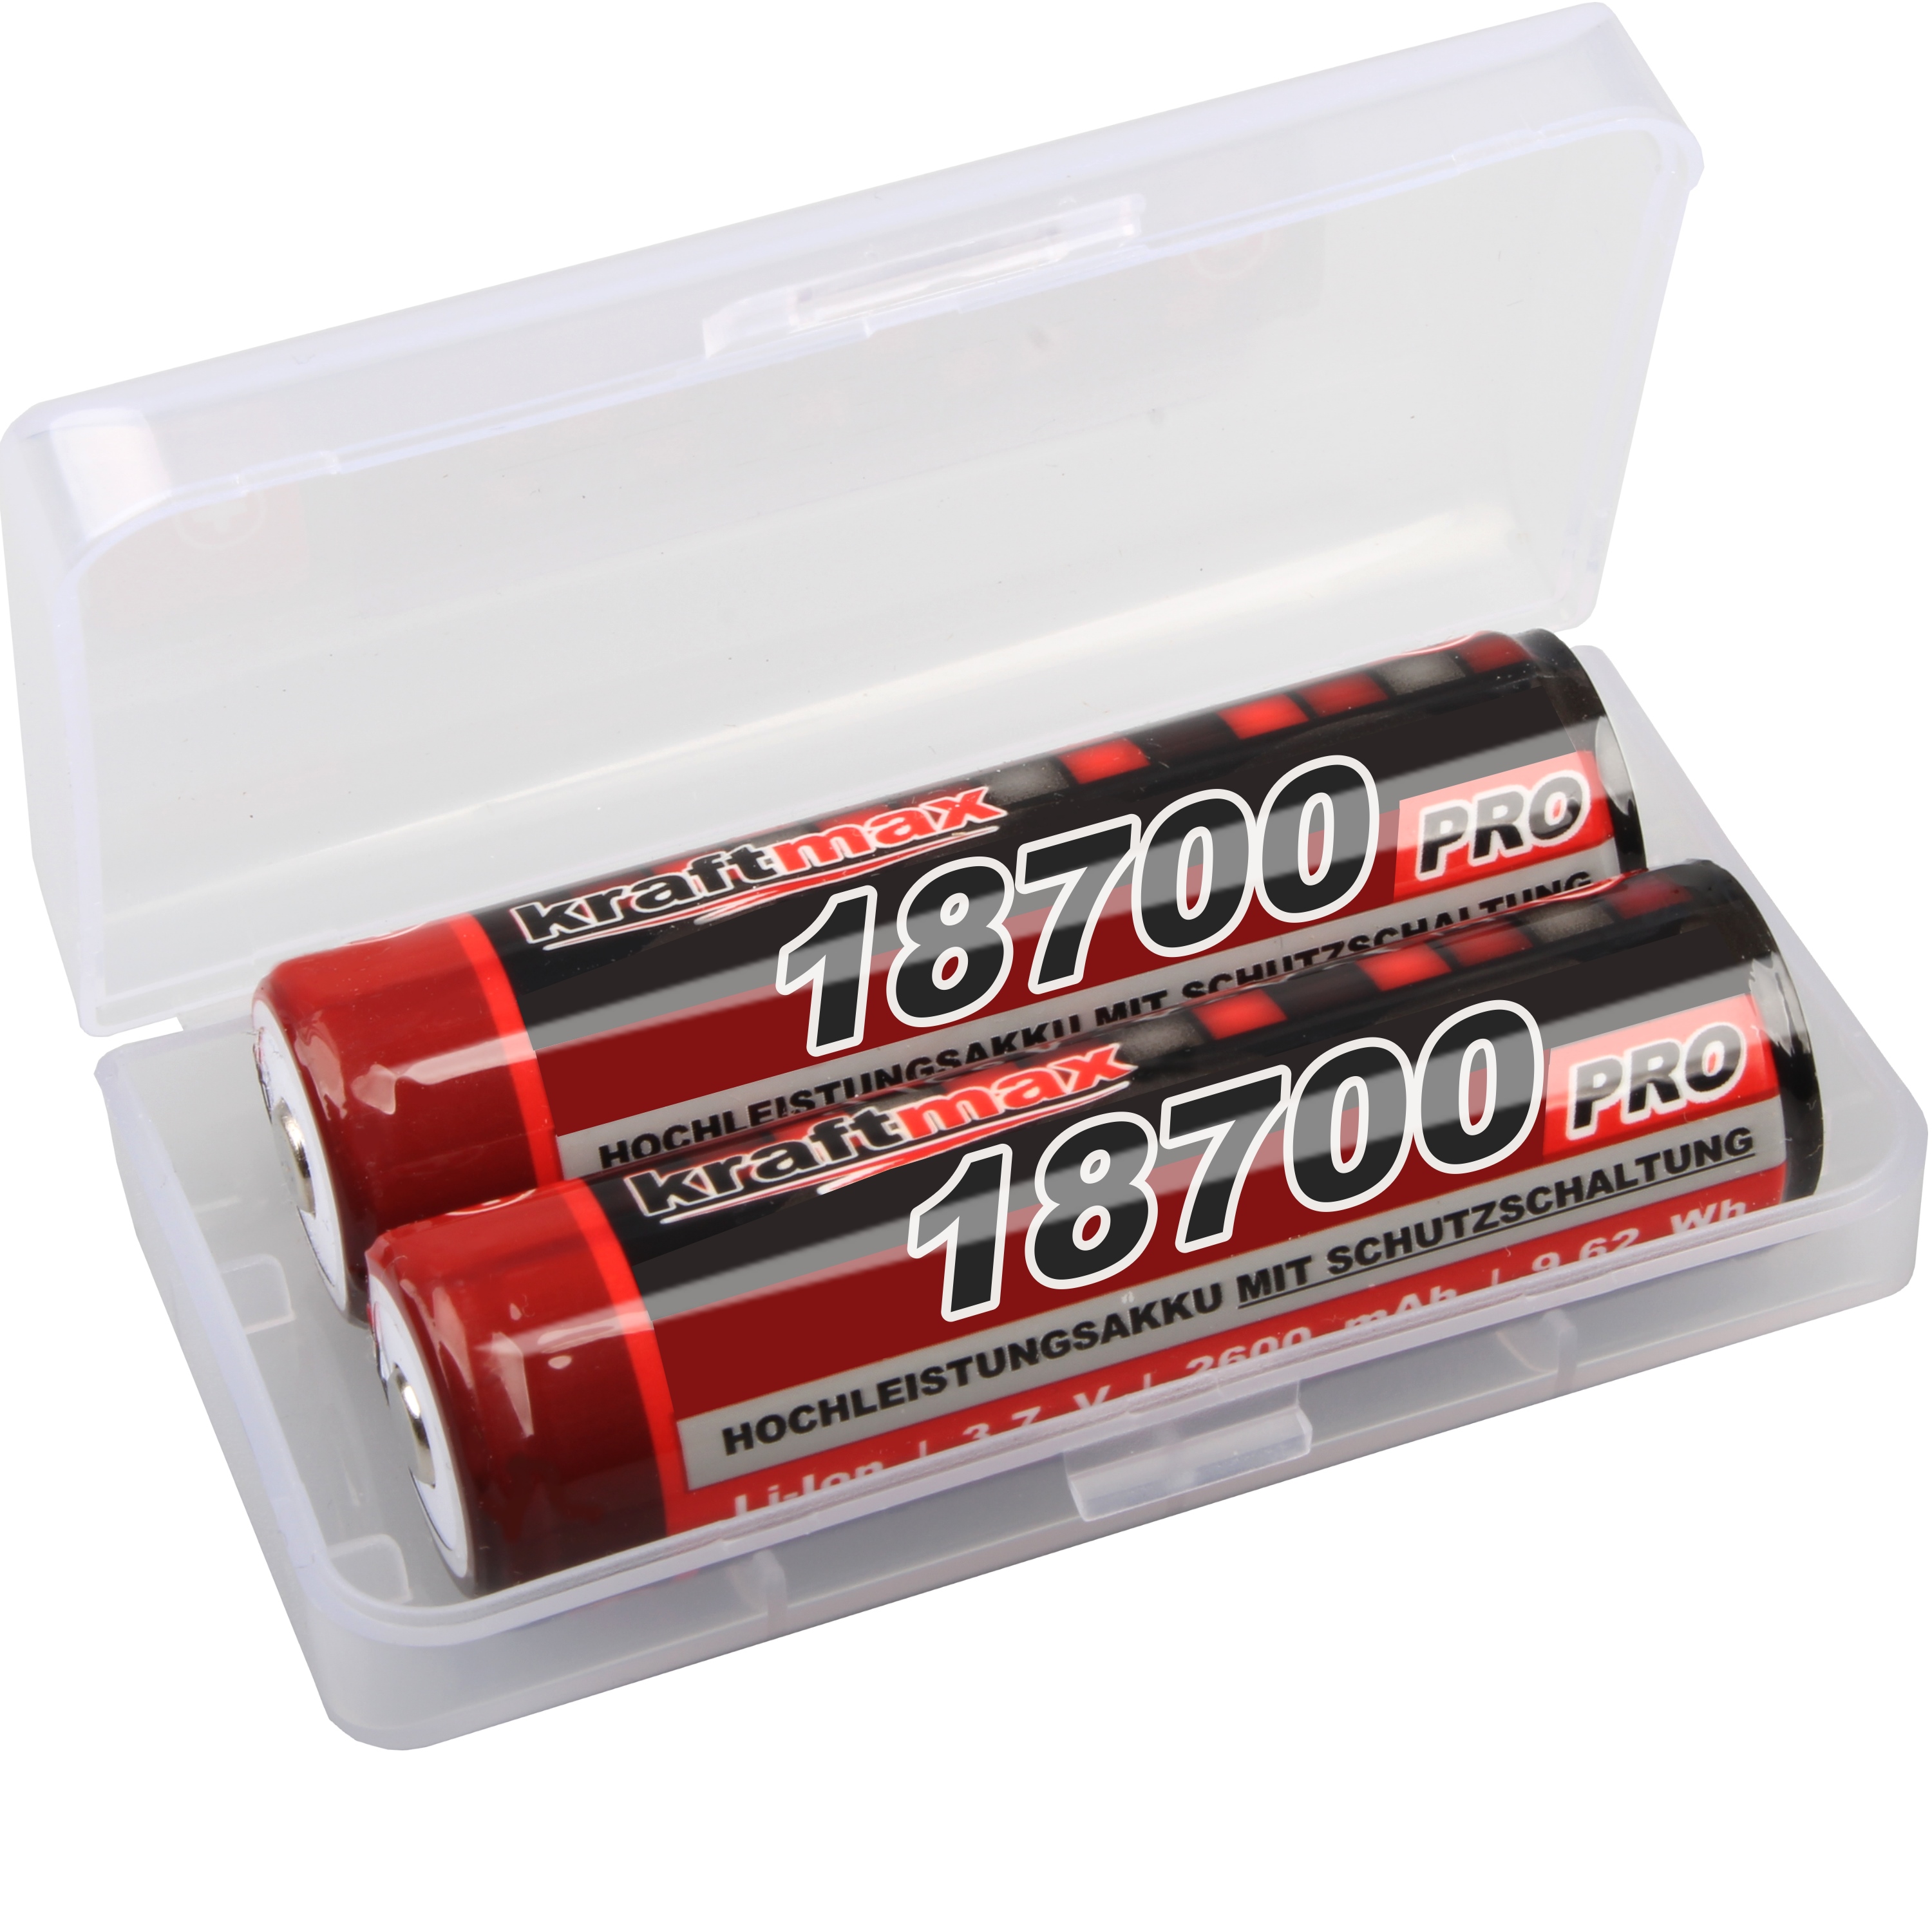 Kaufe 2PCS Industrielle Kunststoff Einstellbare 18650 Batterie